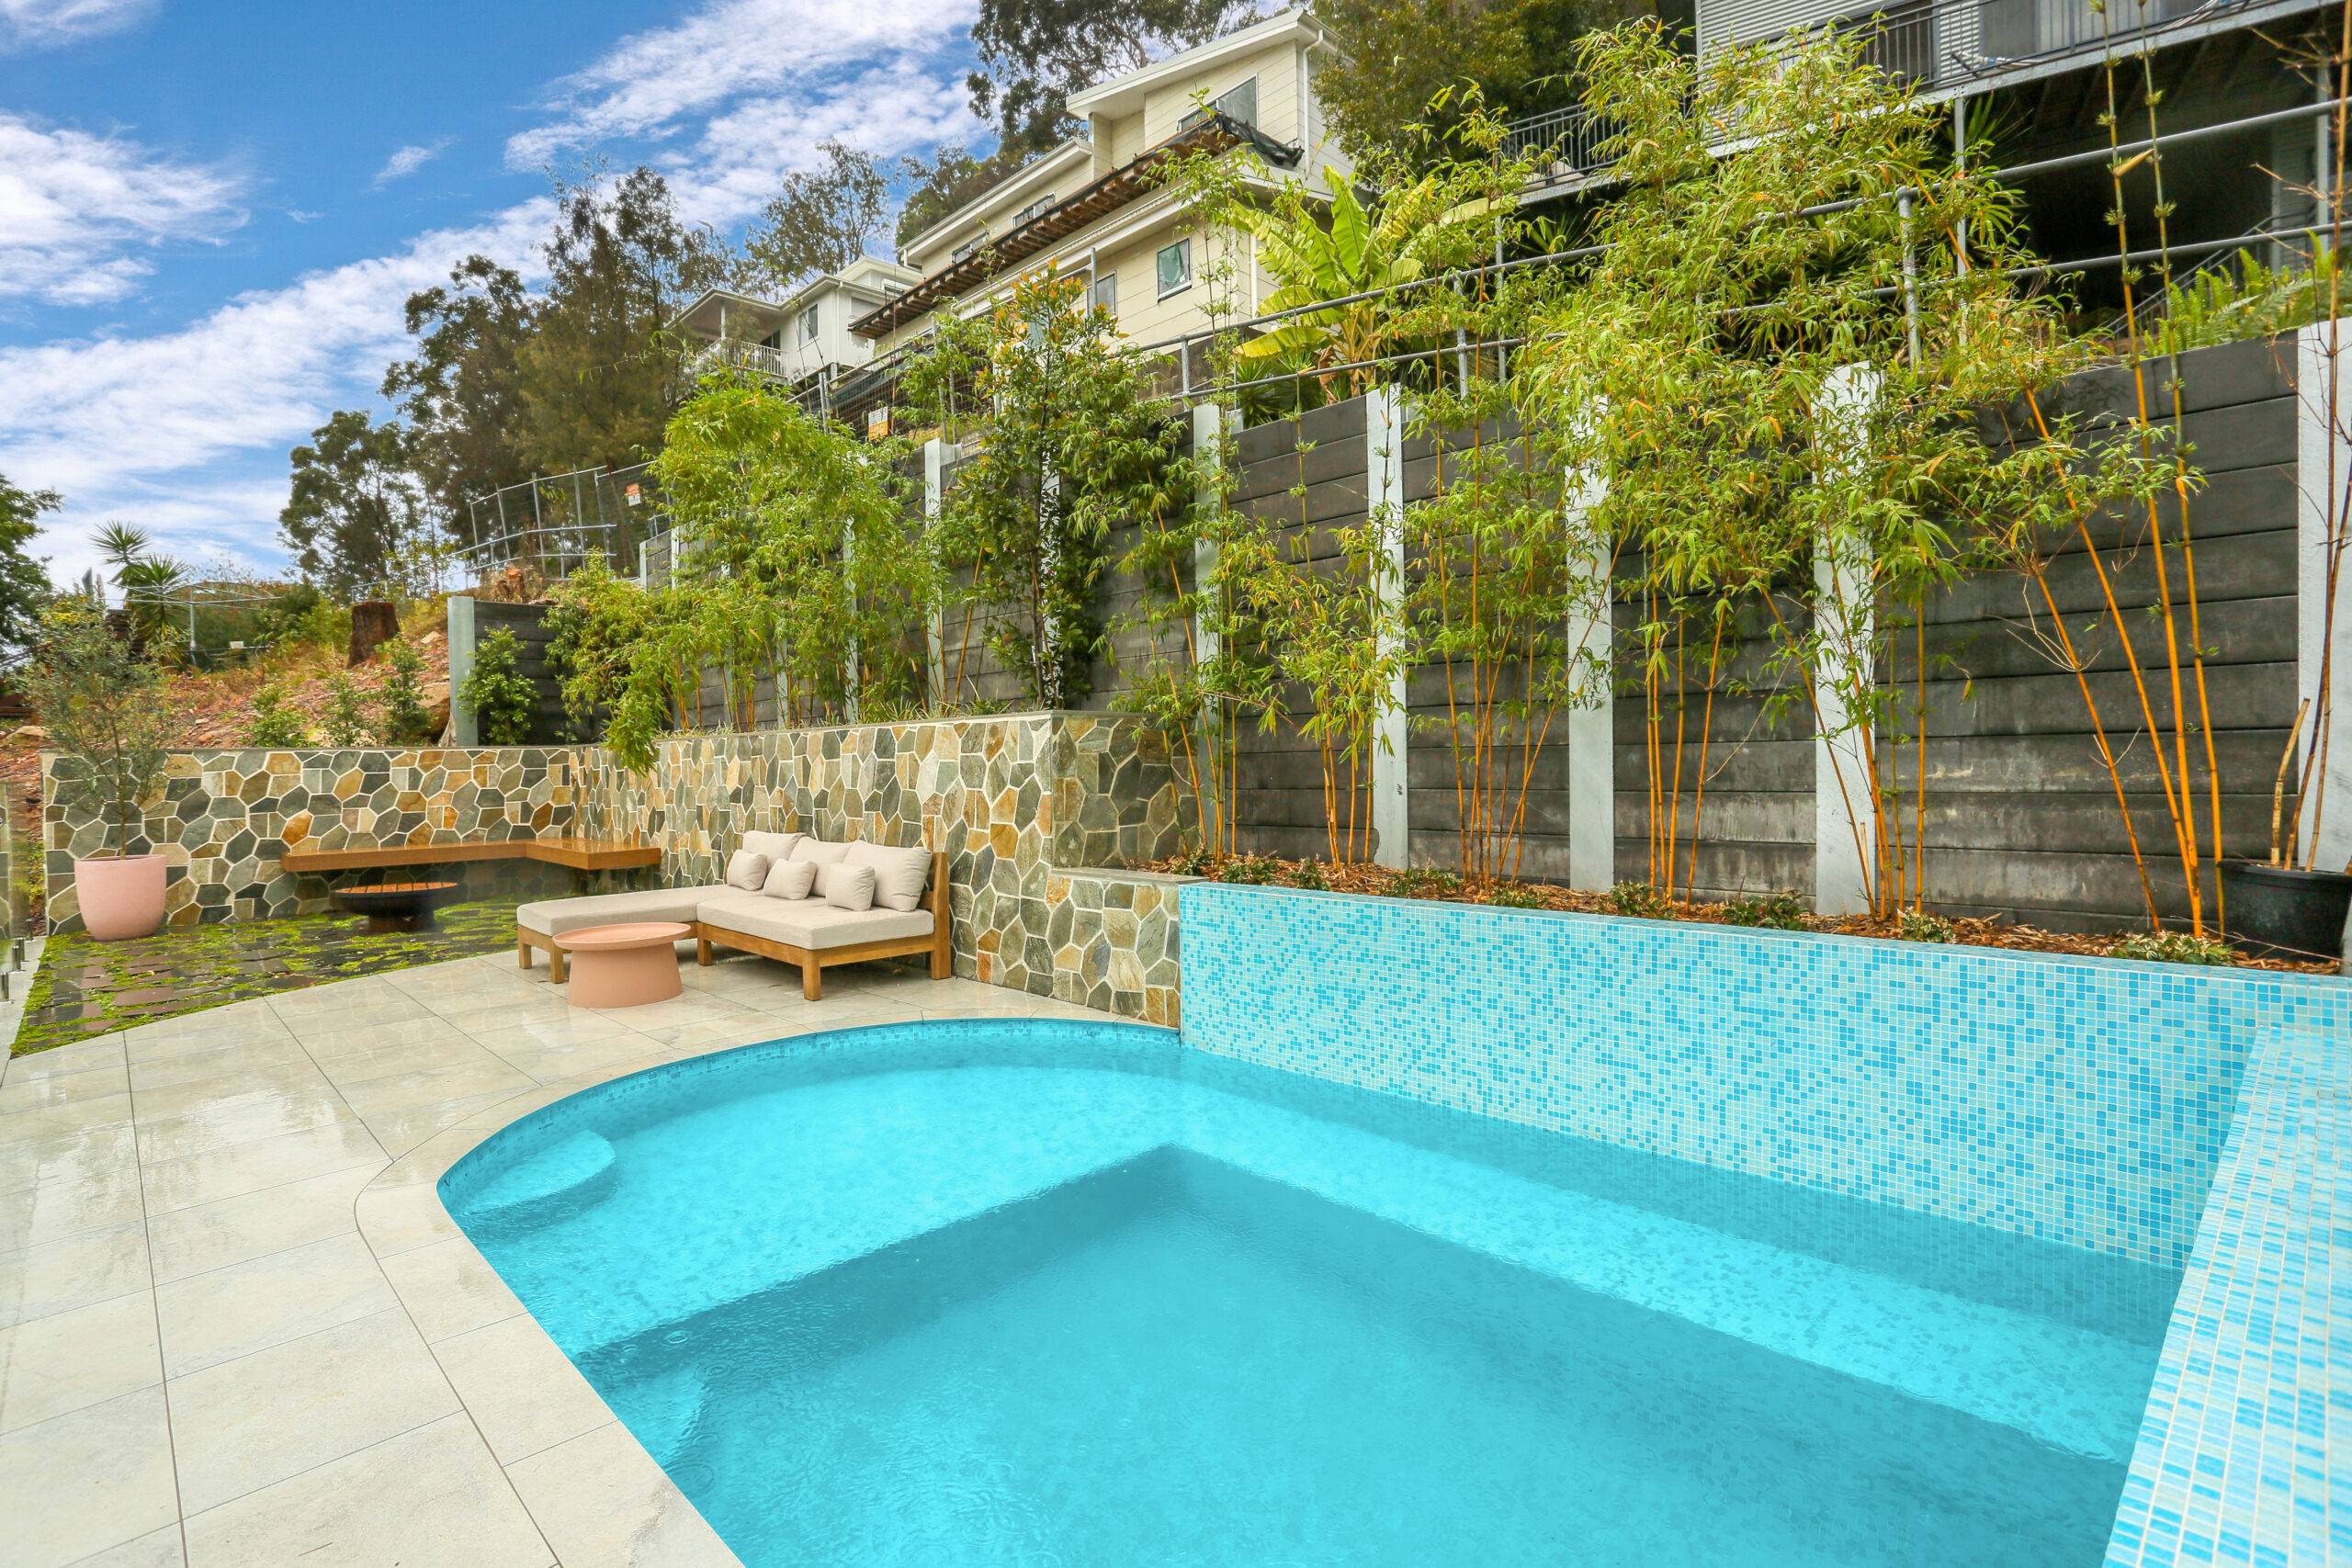 Luxury splash pool and patio